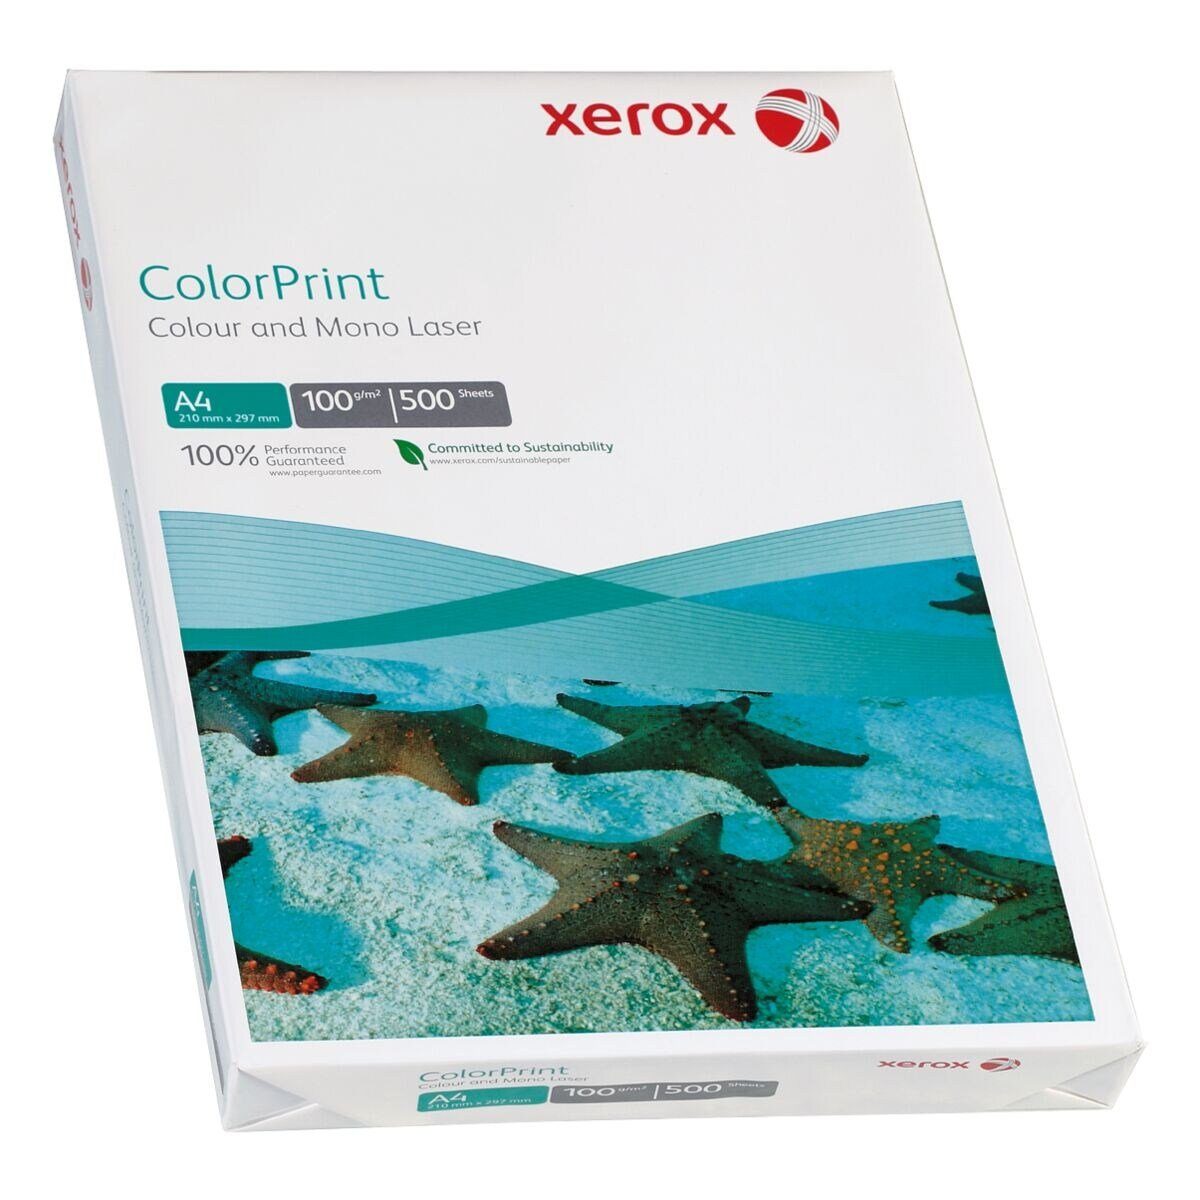 Xerox Farblaser-Druckerpapier g/m², 100 500 ColorPrint, CIE, Format A4, 171 DIN Blatt